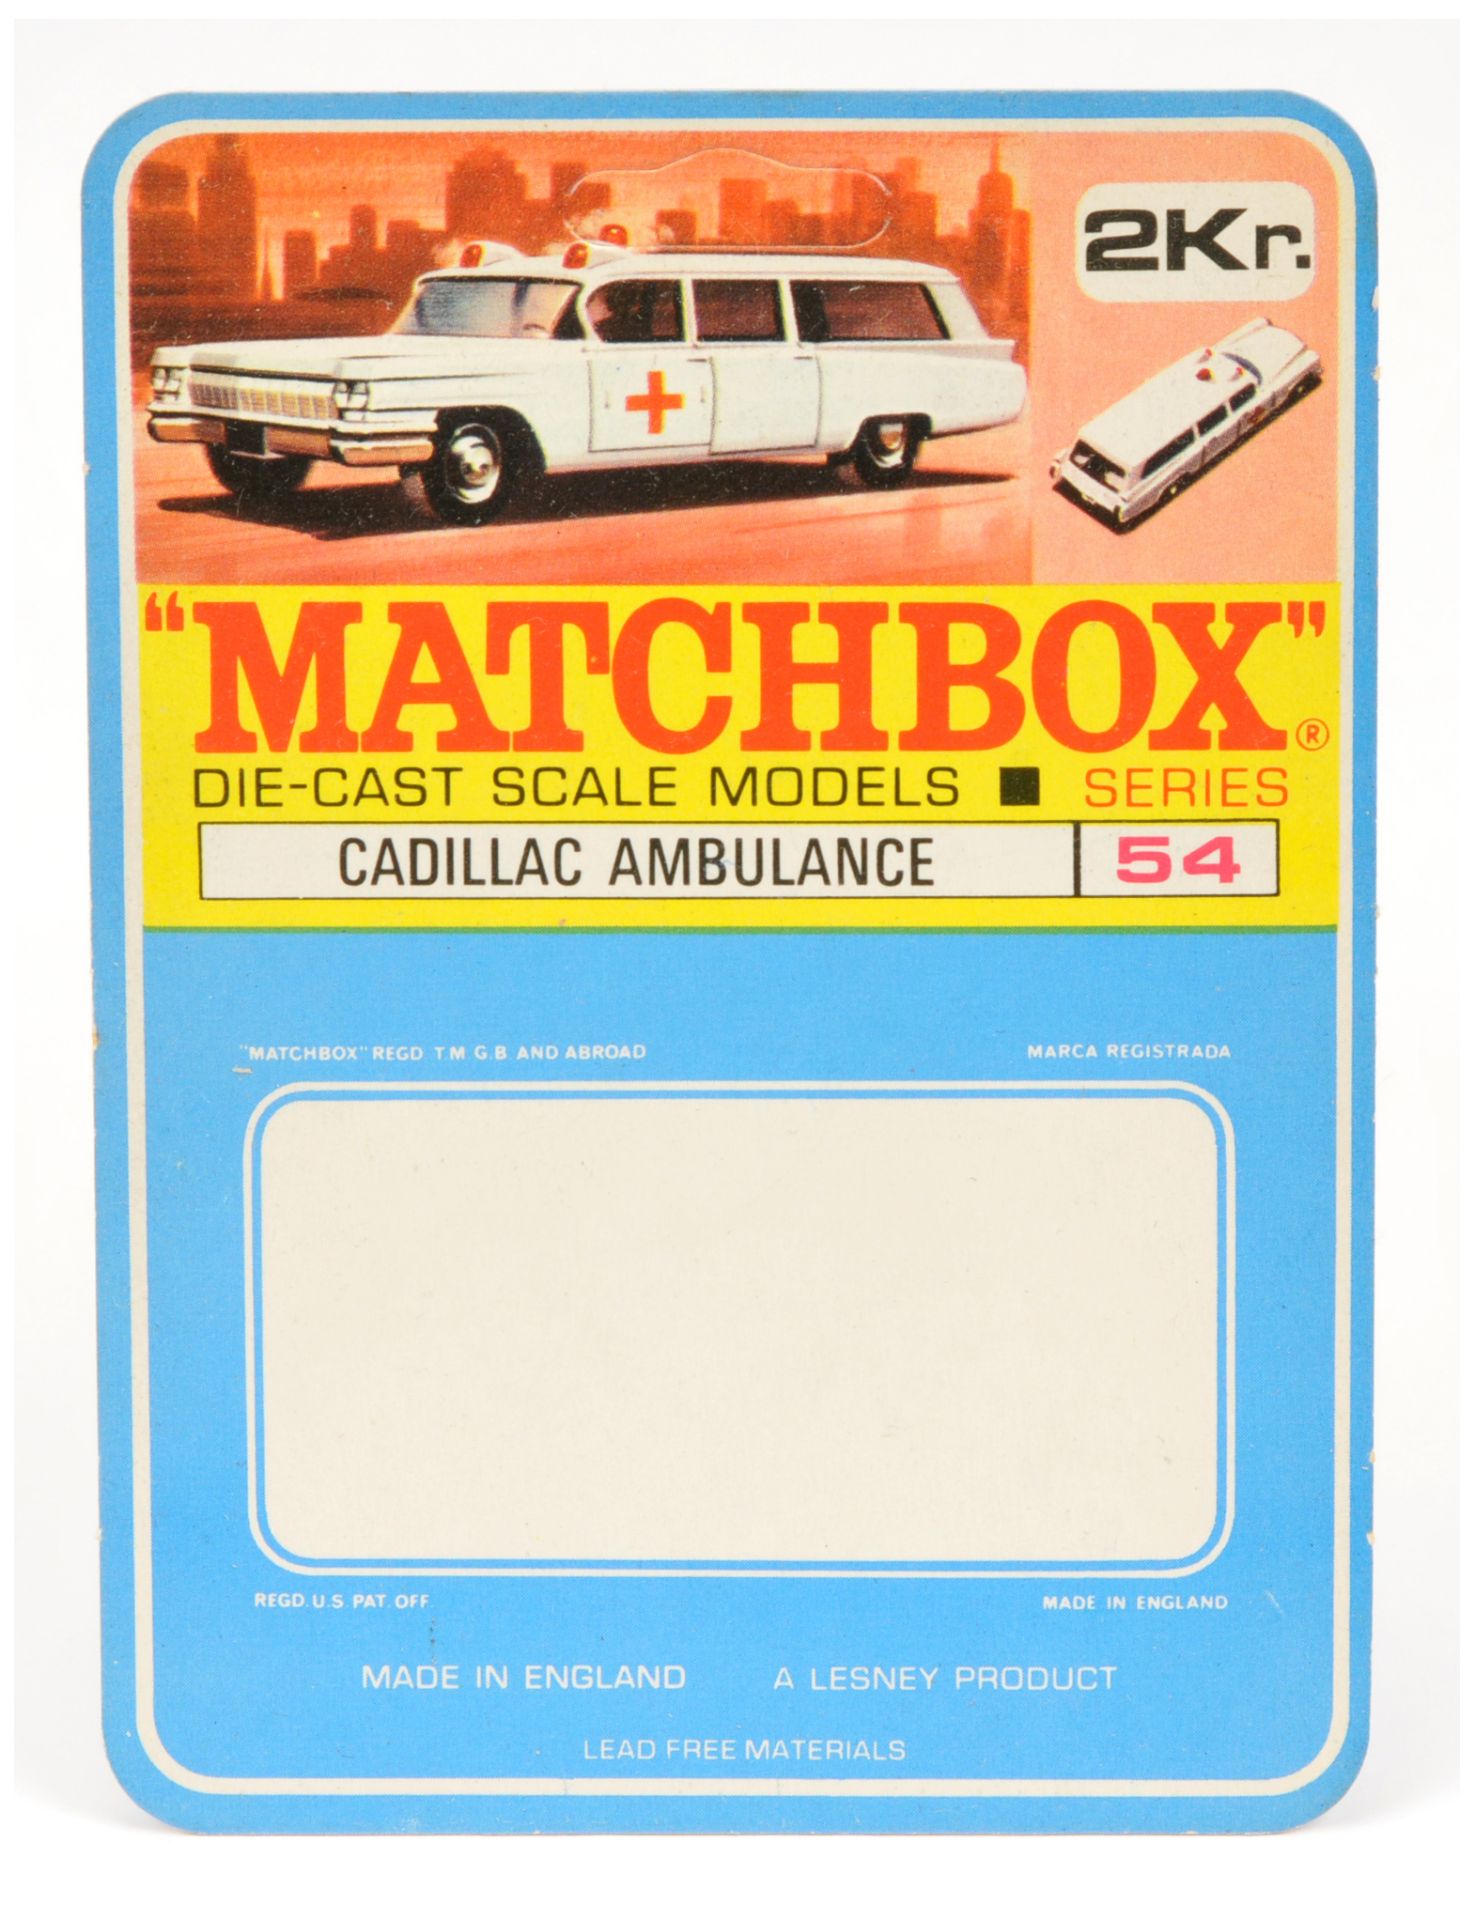 Matchbox Printers Sample North American Market Blister Pack Backing Card for 54b Cadillac Ambulance